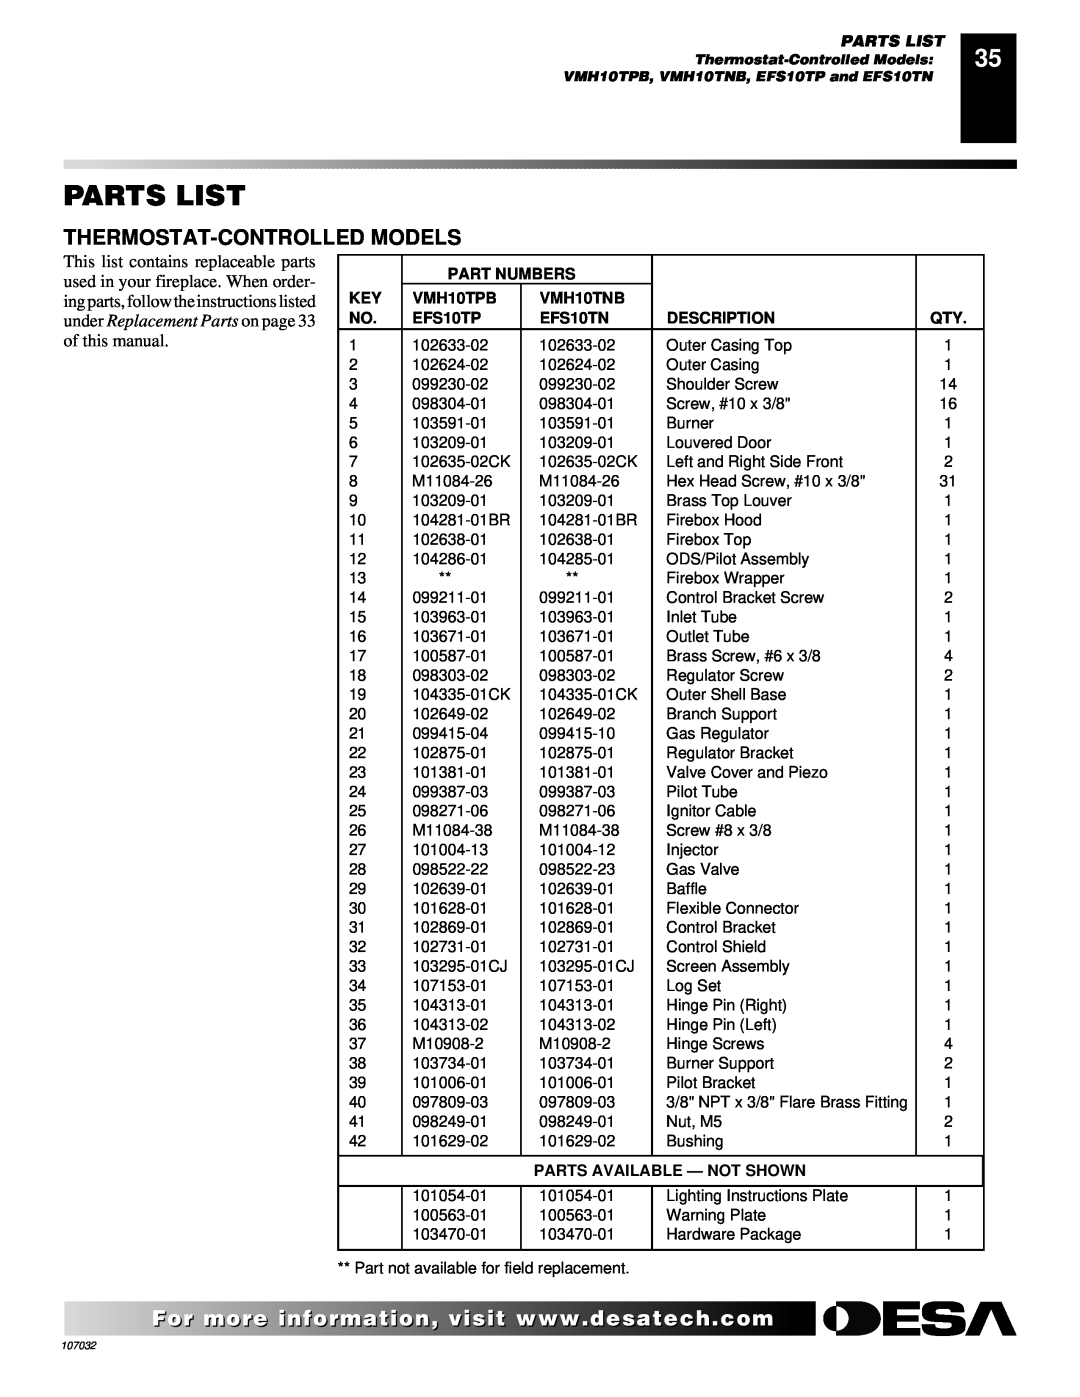 Desa VMH10TPB Parts List, Thermostat-Controlledmodels, Part Numbers, VMH10TNB, EFS10TP, EFS10TN, Description 